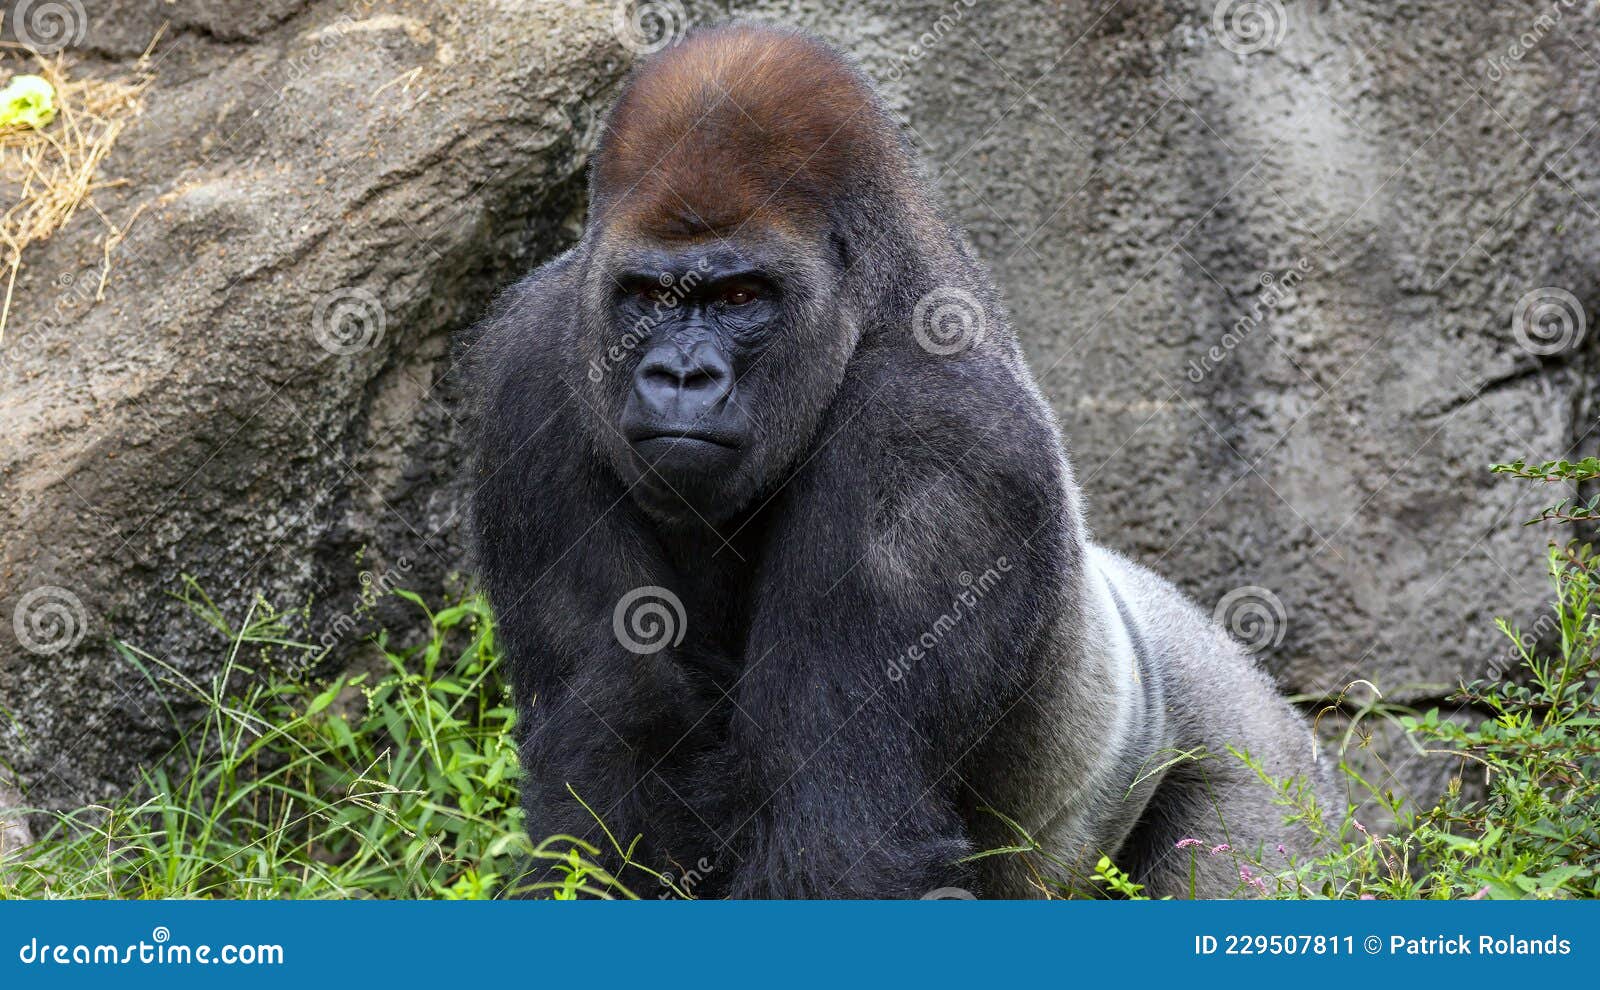 gorilla showing defiance glaring into camera